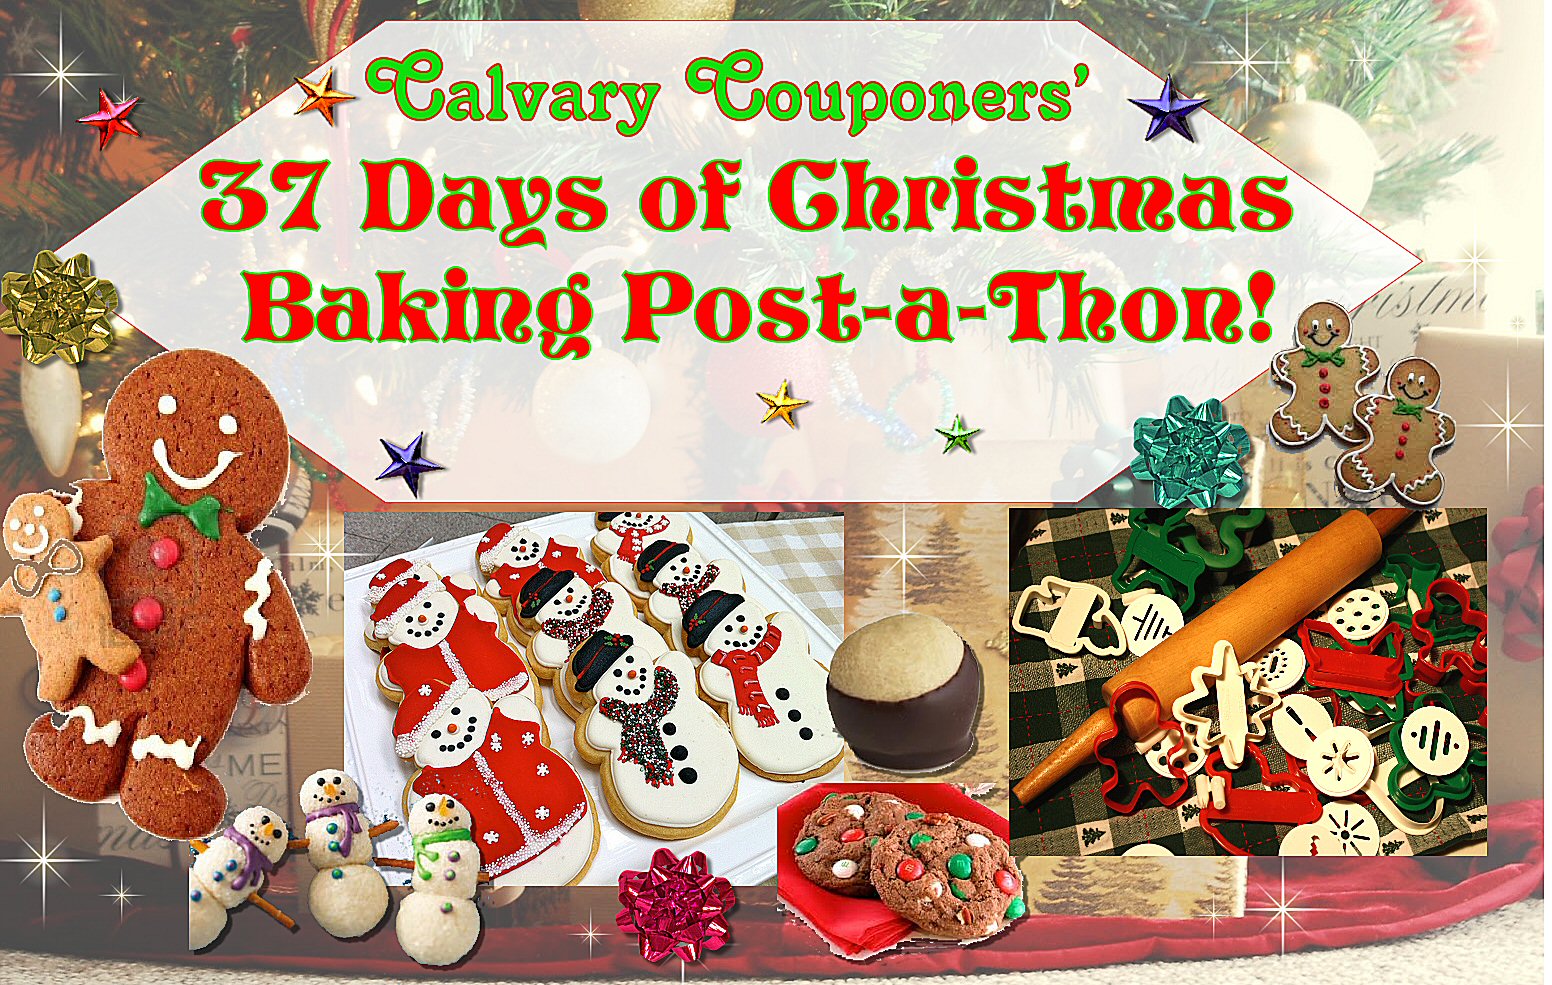 37 Days of Christmas Baking Post-a-Thon - Calvary Couponers dot com